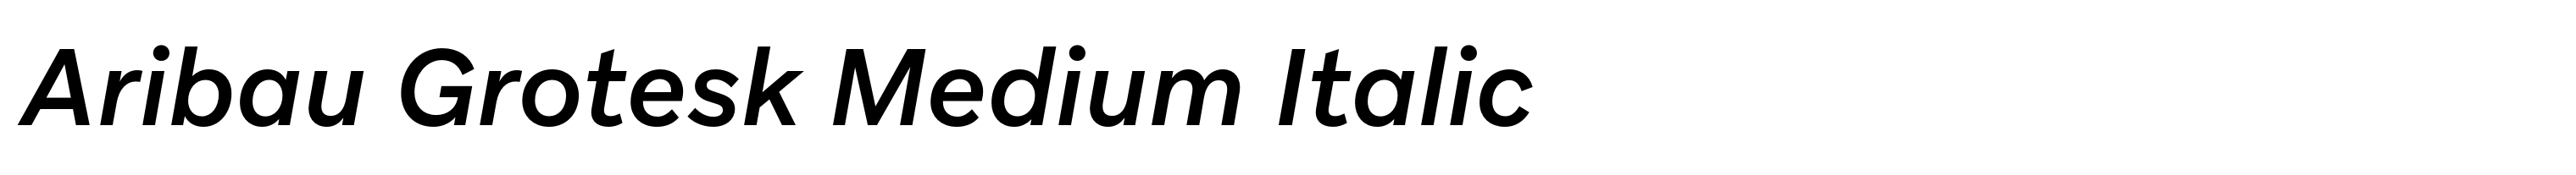 Aribau Grotesk Medium Italic